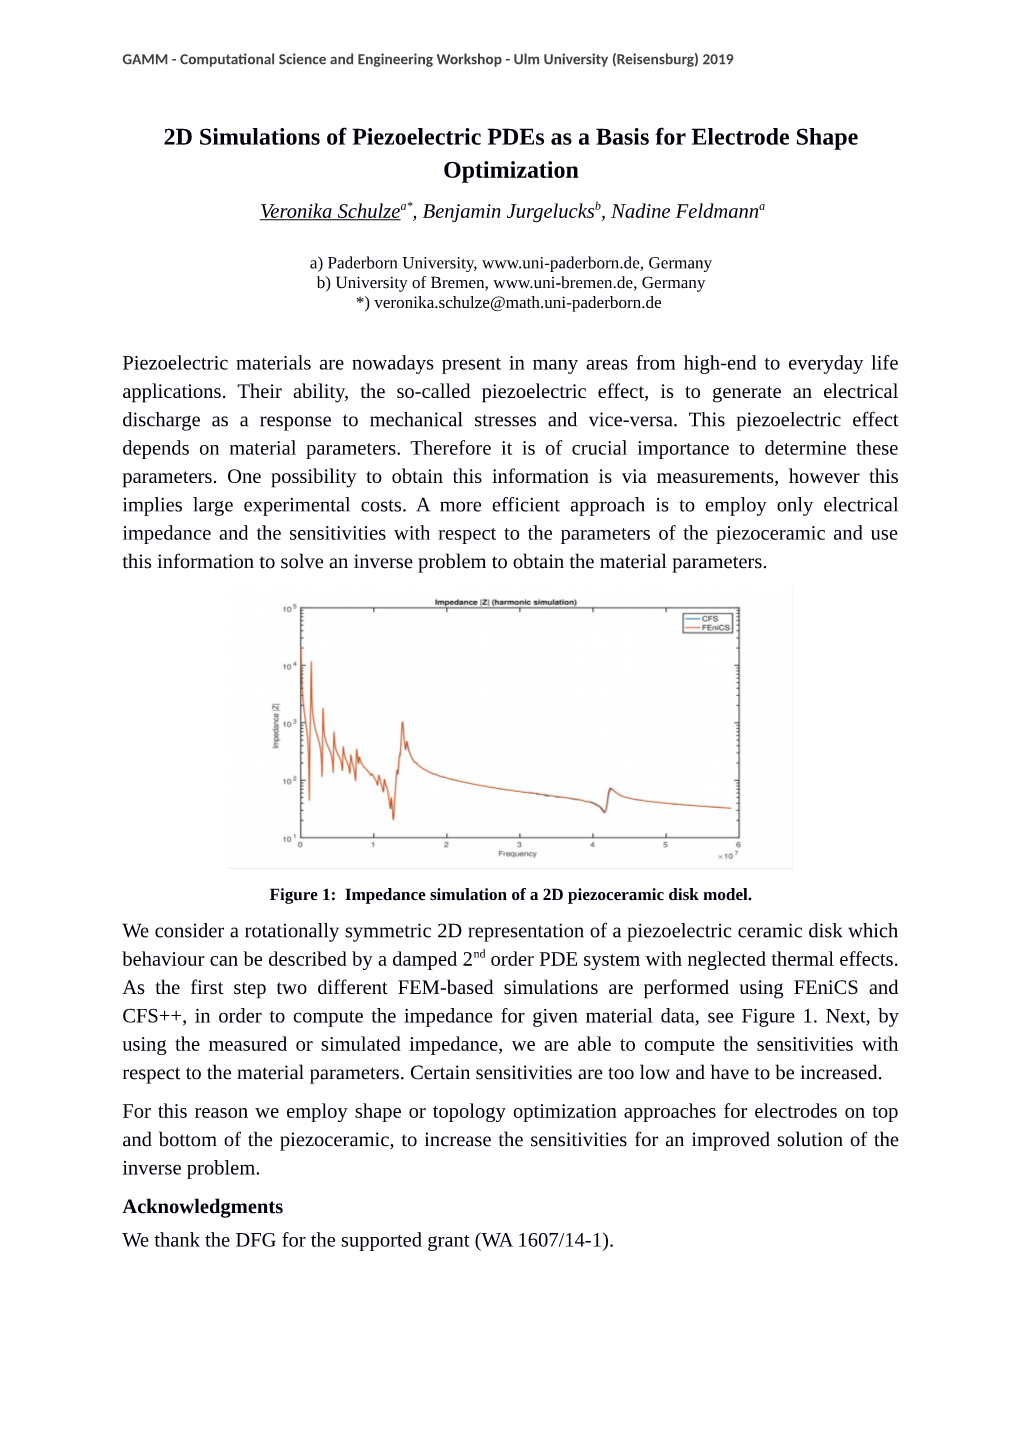 2D Simulations of Piezoelectric Pdes As a Basis for Electrode Shape Optimization Veronika Schulzea*, Benjamin Jurgelucksb, Nadine Feldmanna